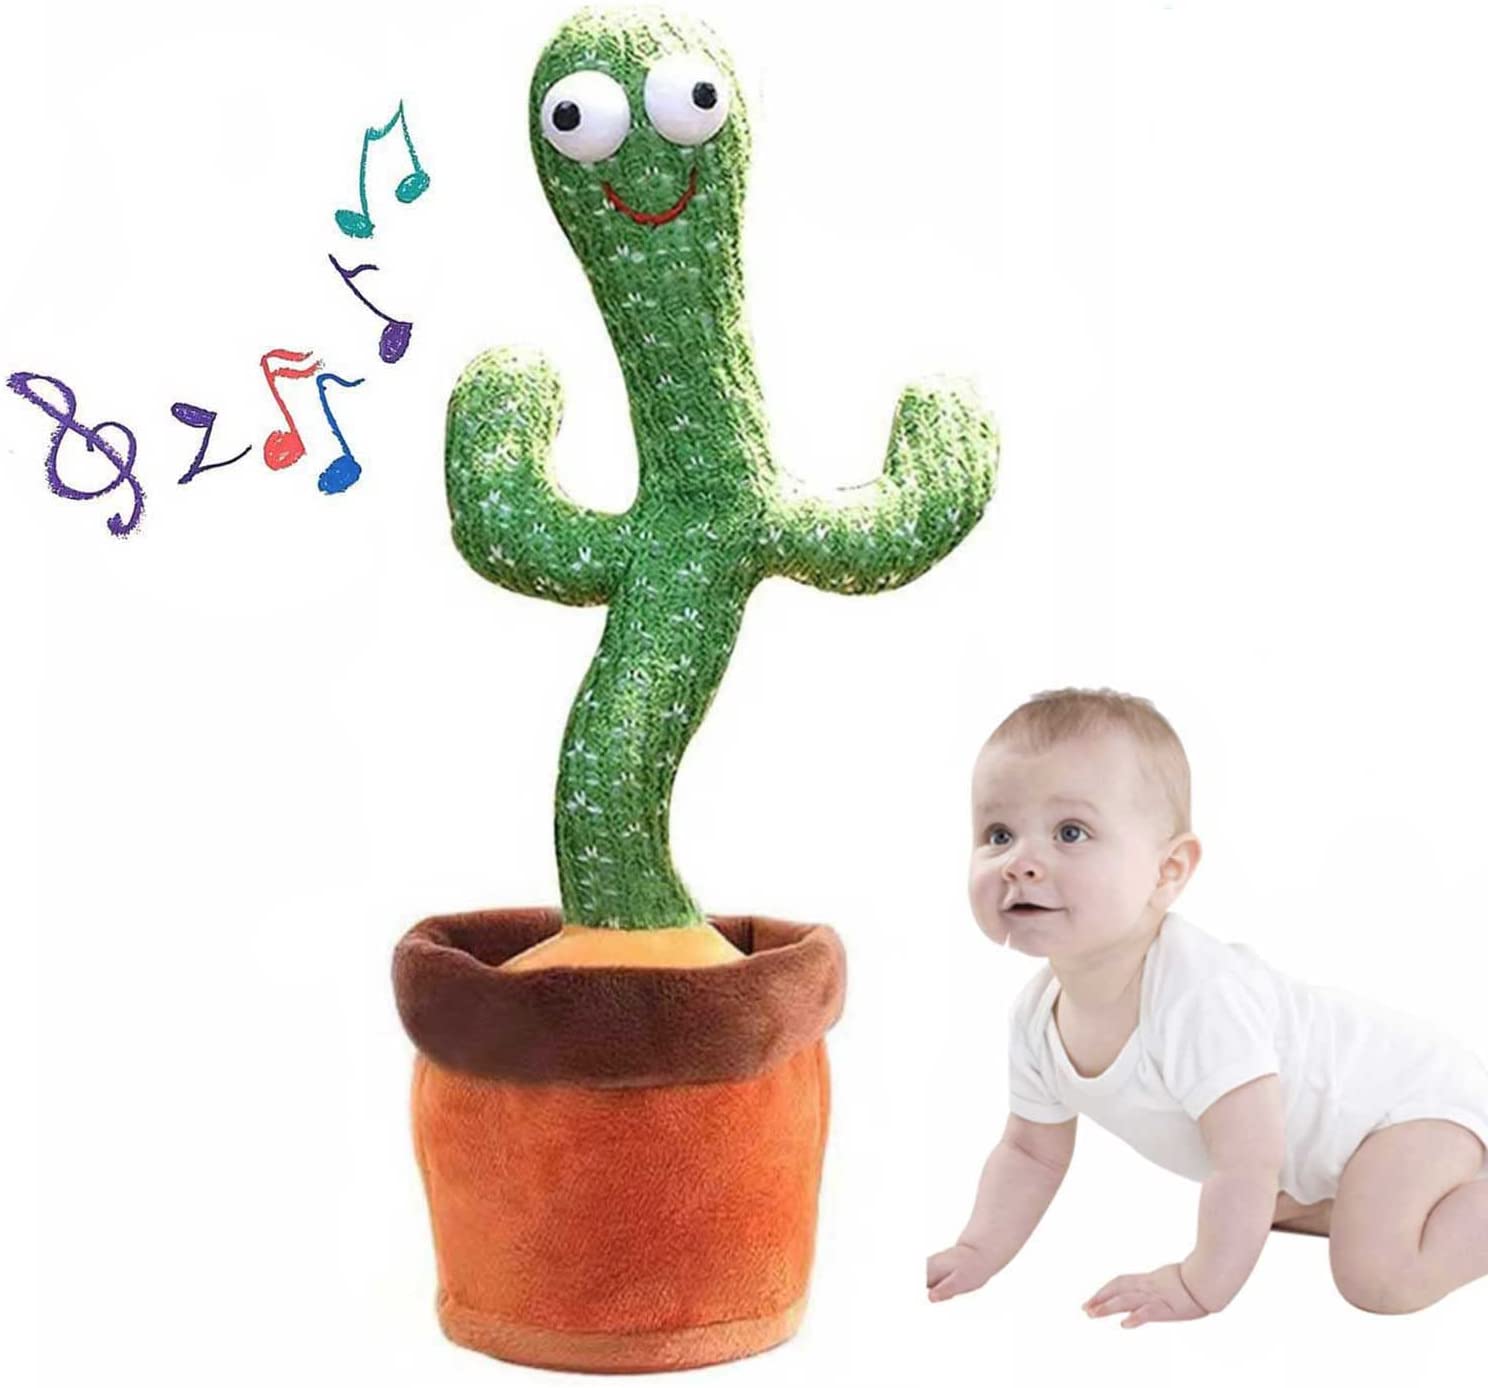 Dancing Cactus Toy I Original Cactus Toy Dancing Singing For Baby